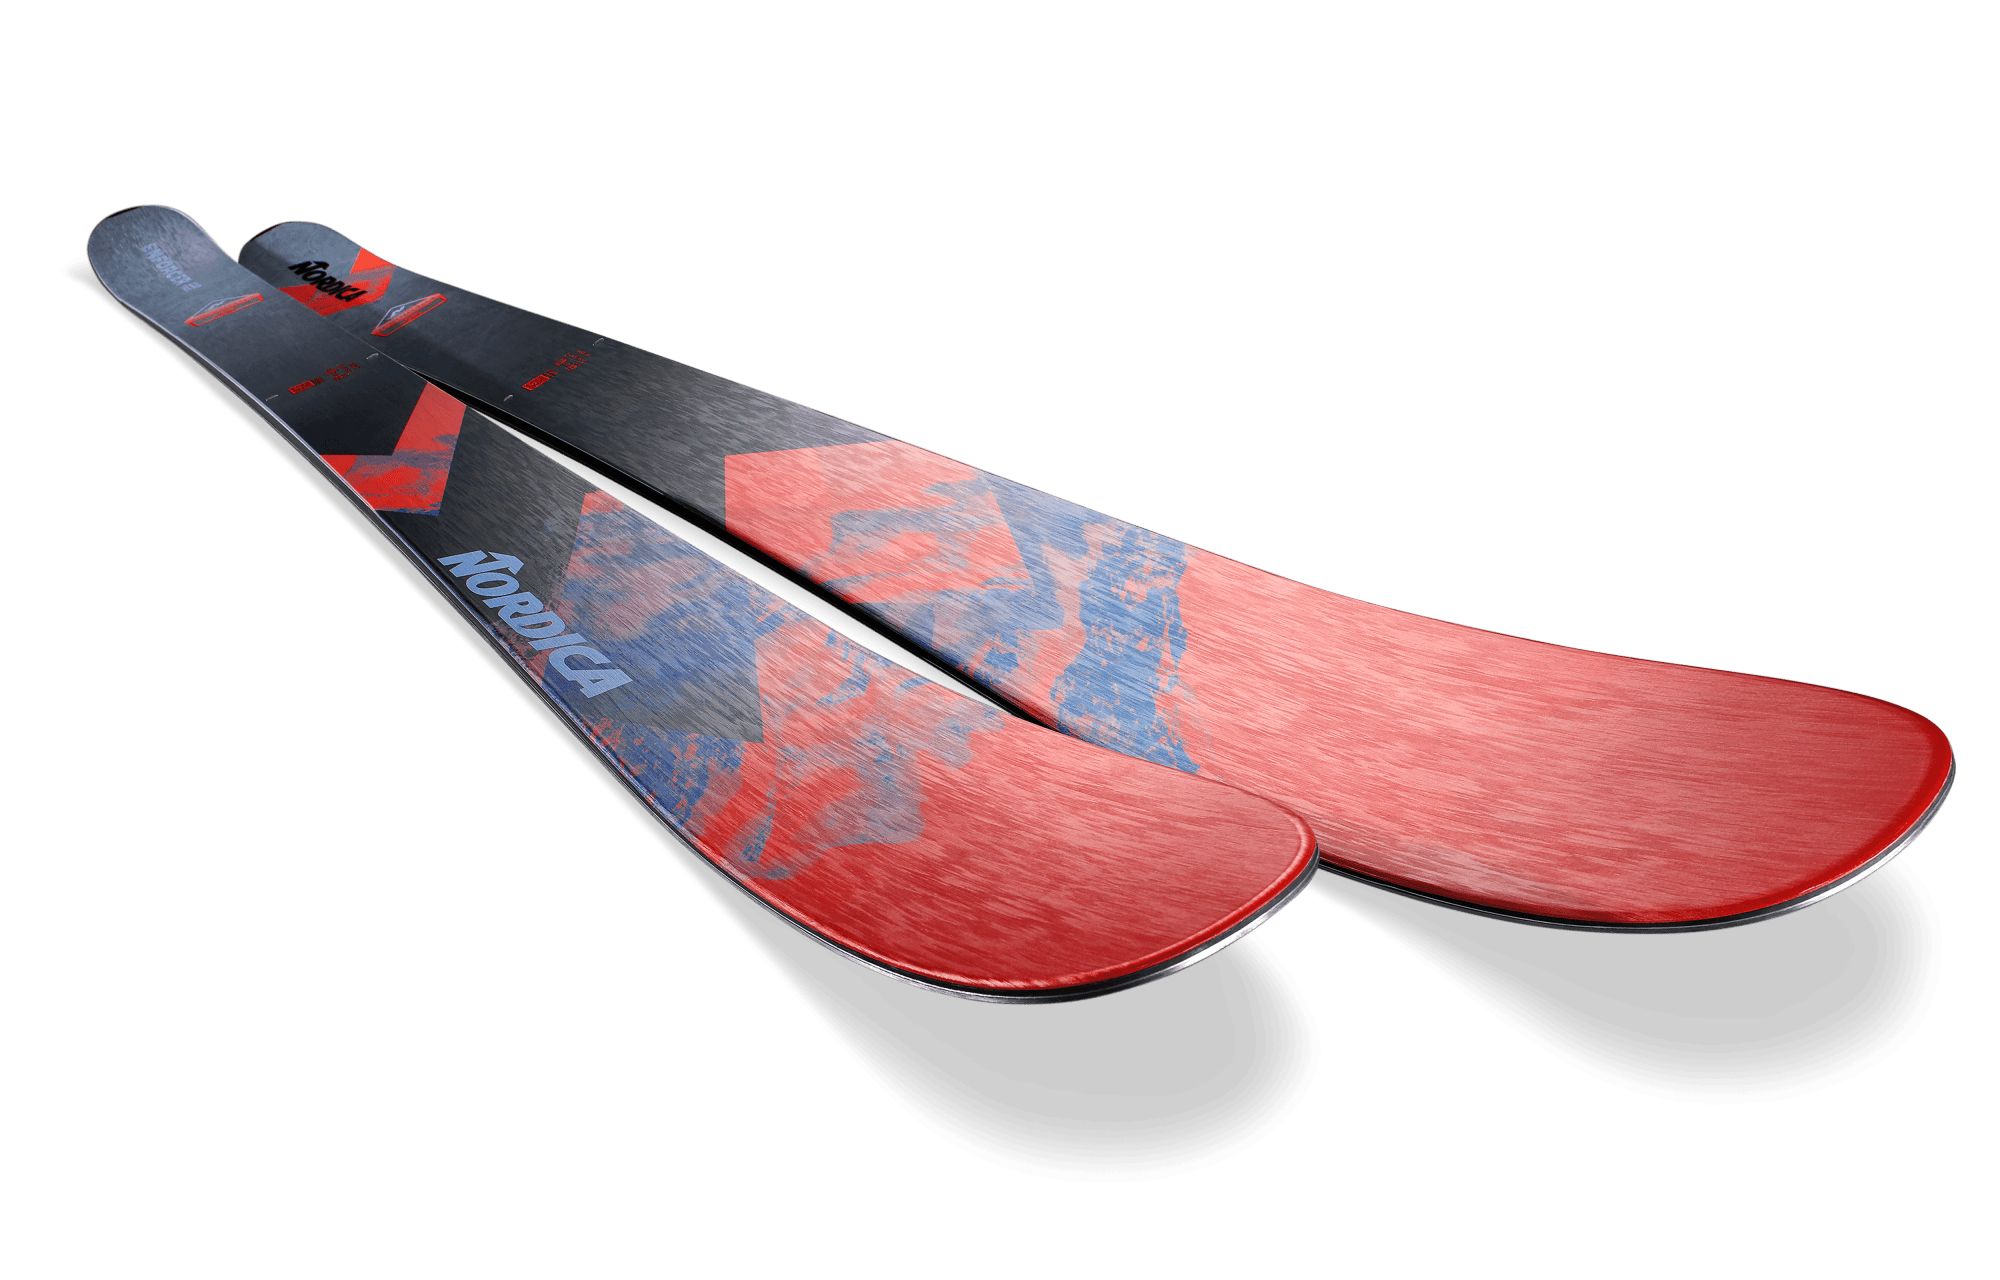 Nordica Enforcer 110 Free Skis · 2023 · 177 cm